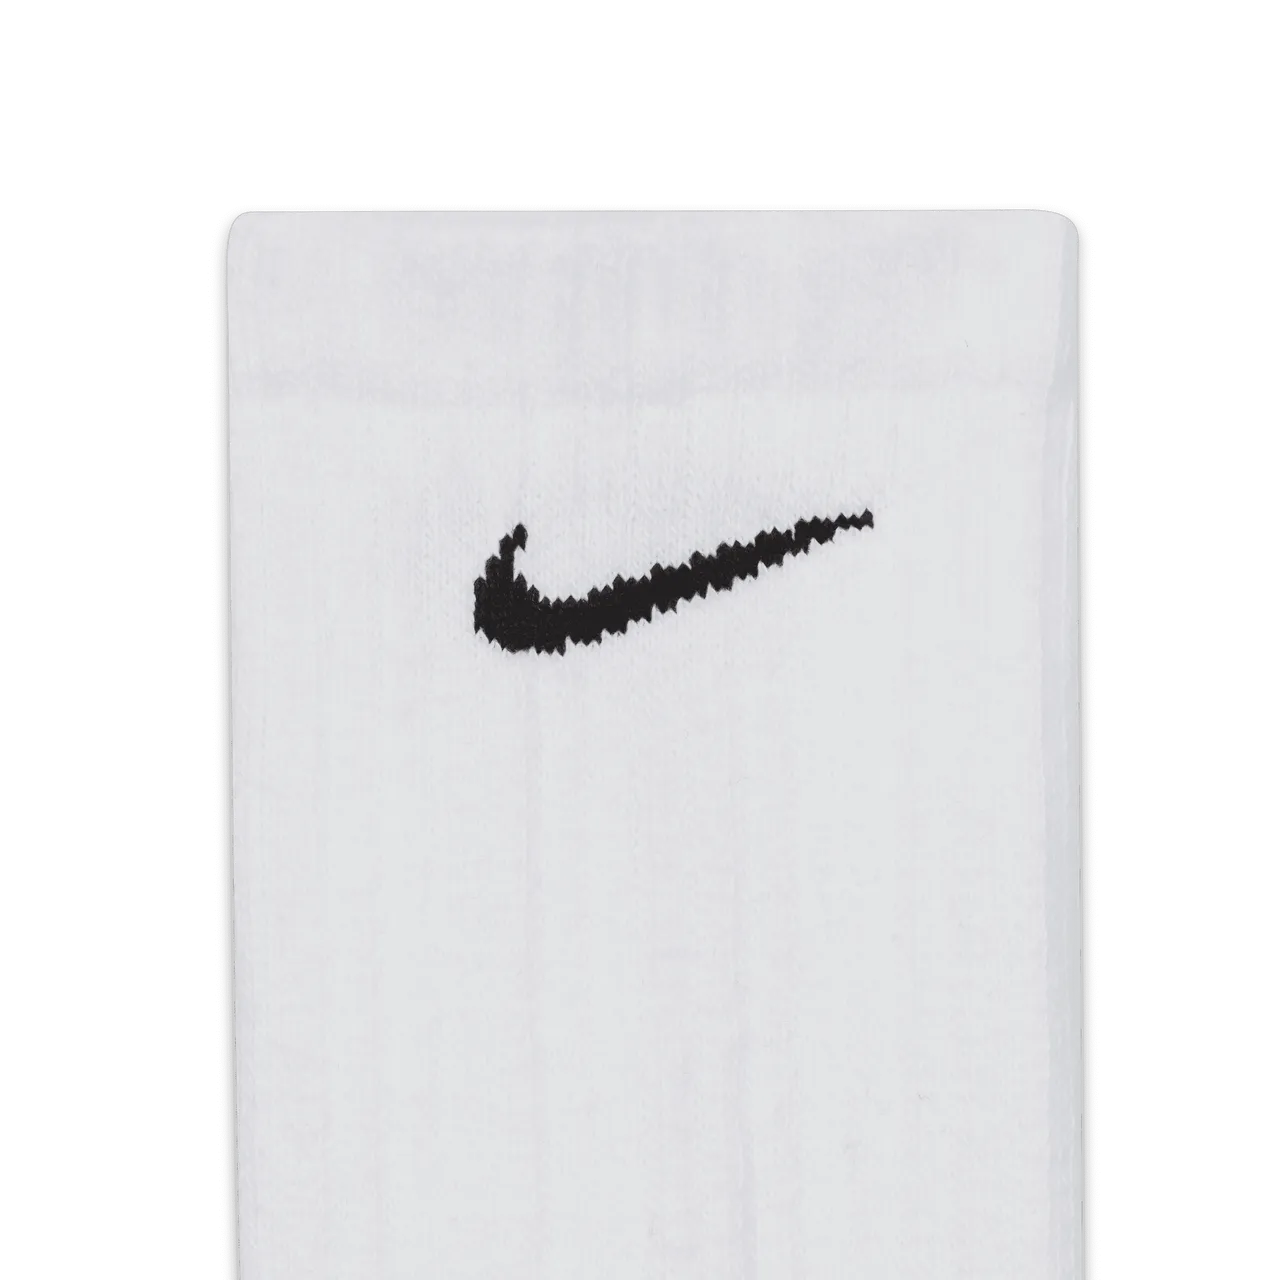 Nike Everyday Cushioned Training Crew Socks (3 Pairs) - Multi-Colour - Polyester